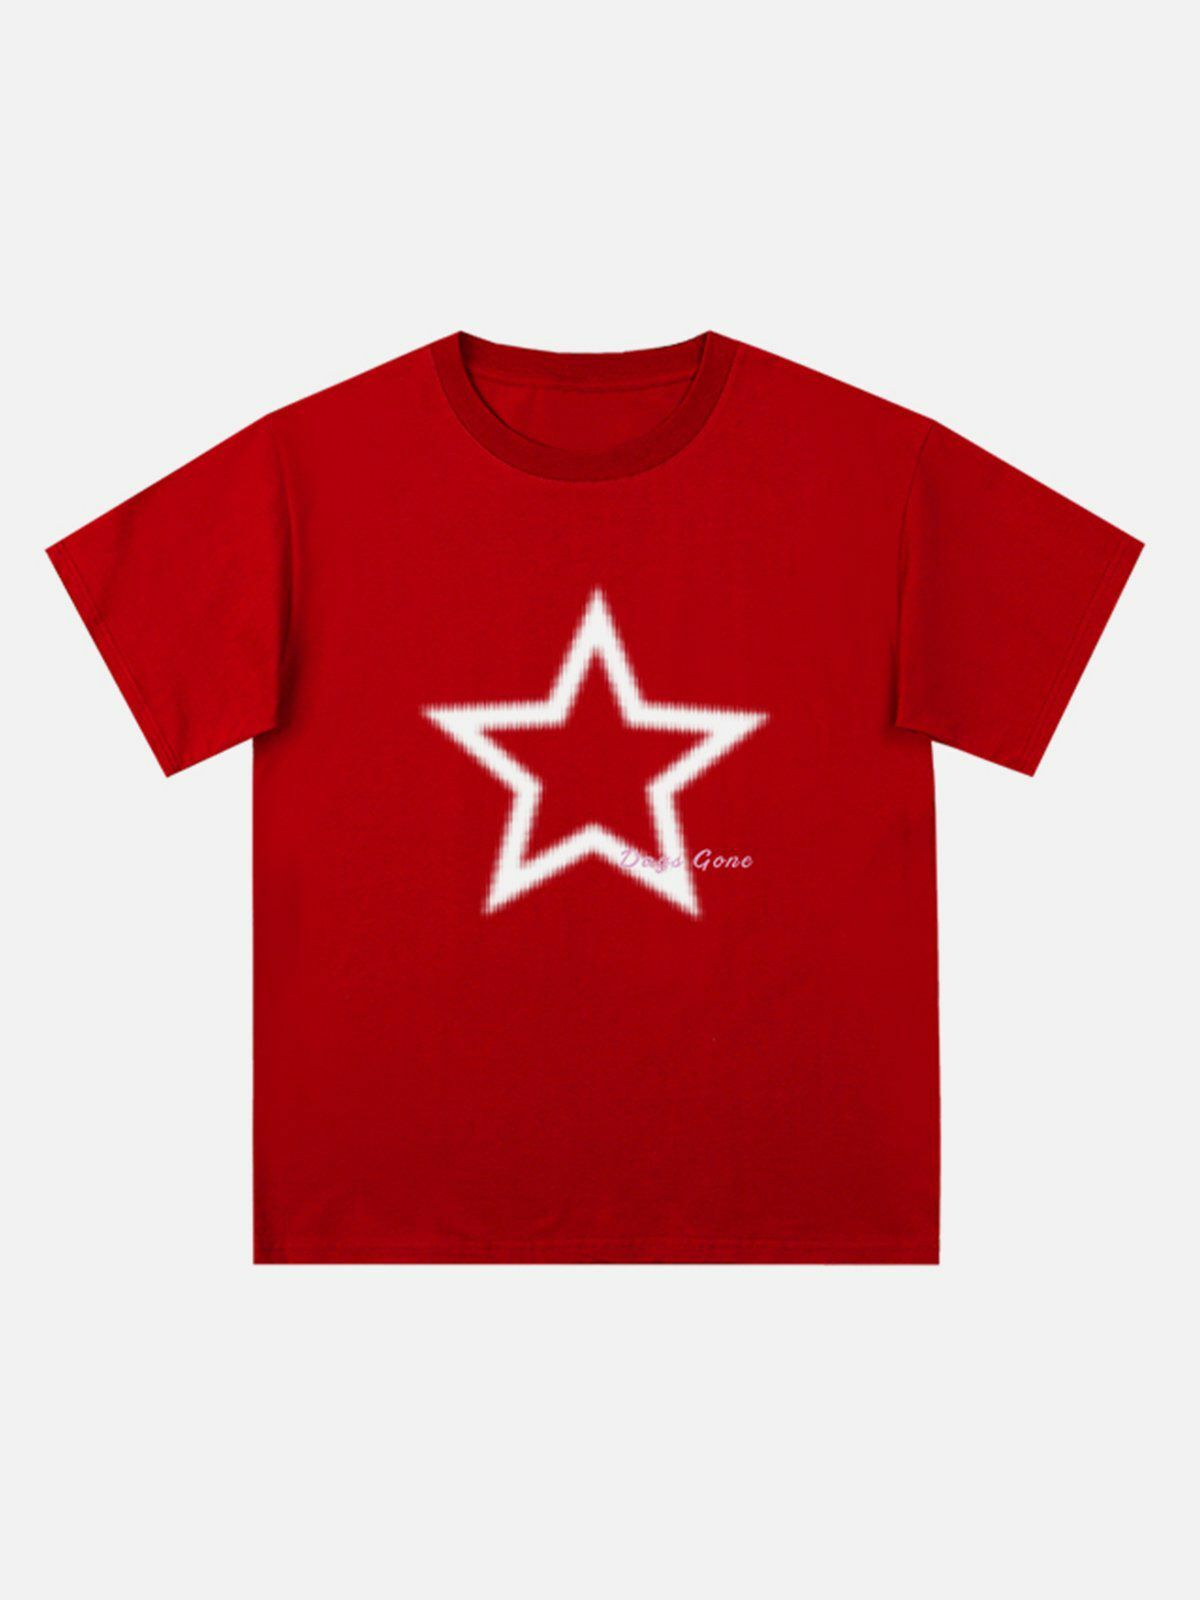 playful star print tee edgy  retro shirt for youthful streetwear 1564